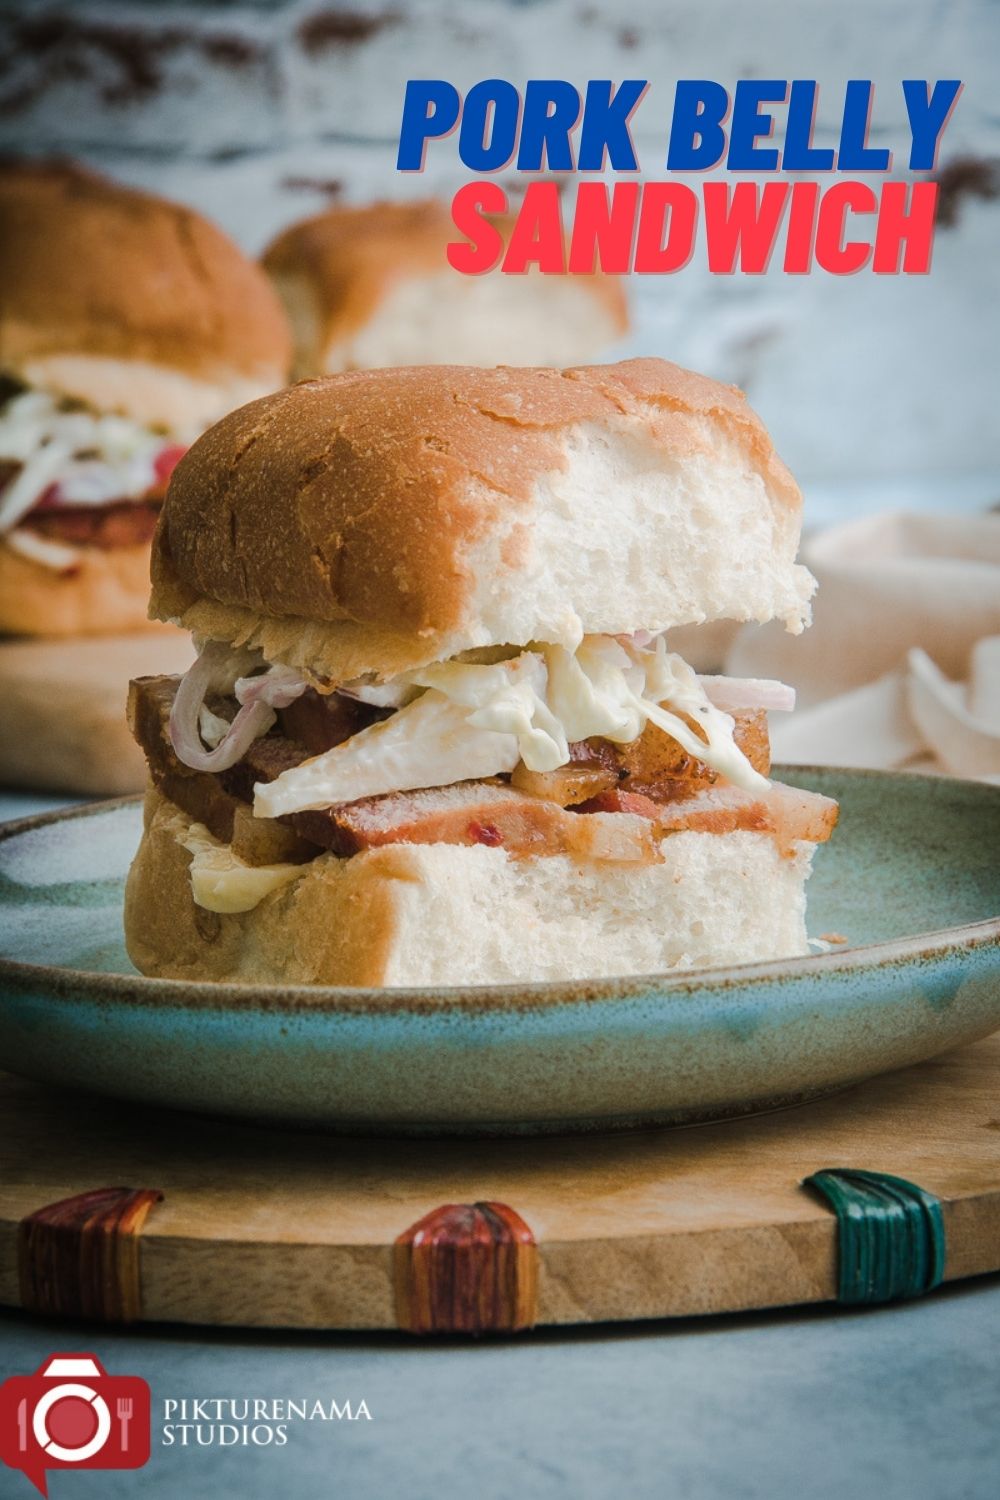 Pork belly Sandwich - Pinterest 